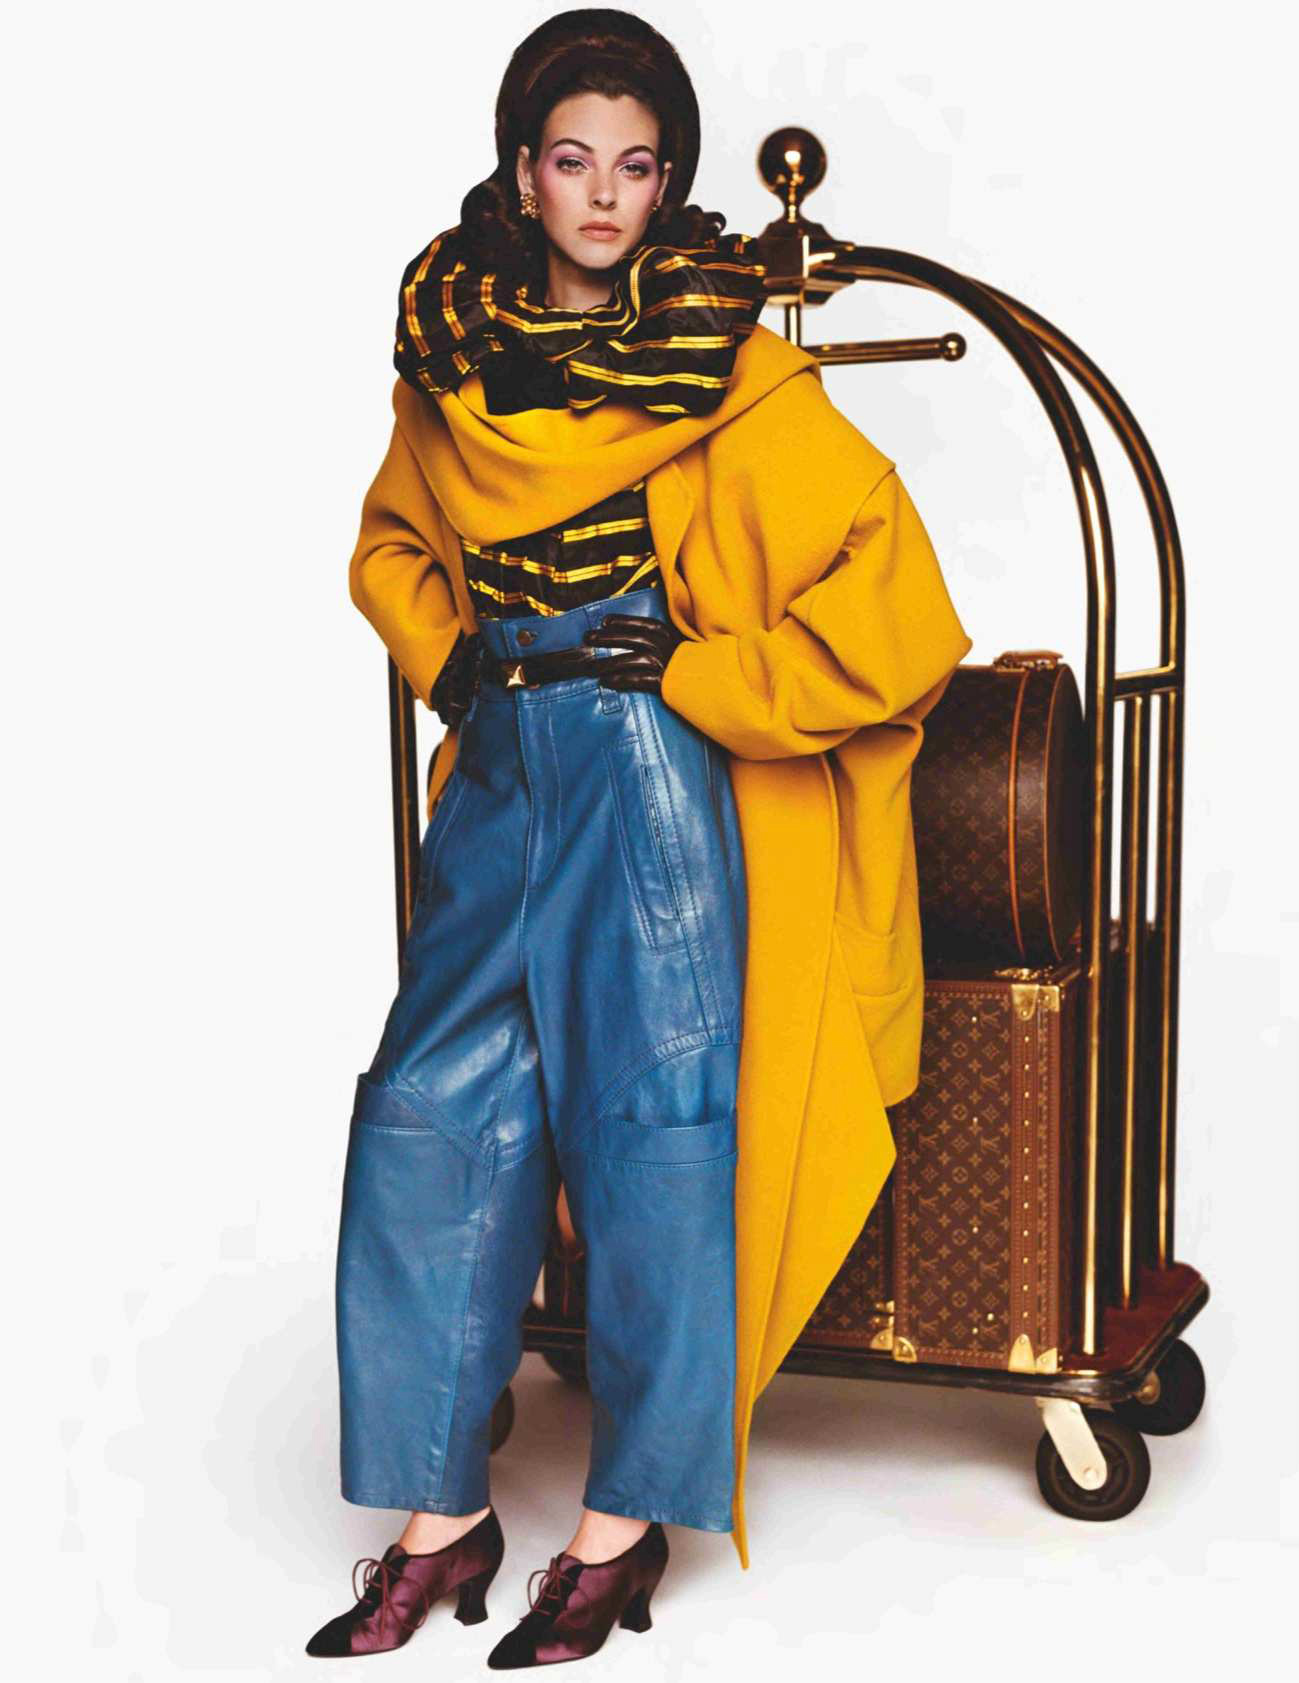 Vittoria-Ceretti-Alasdair-McLellan-Vogue UK (1).jpg